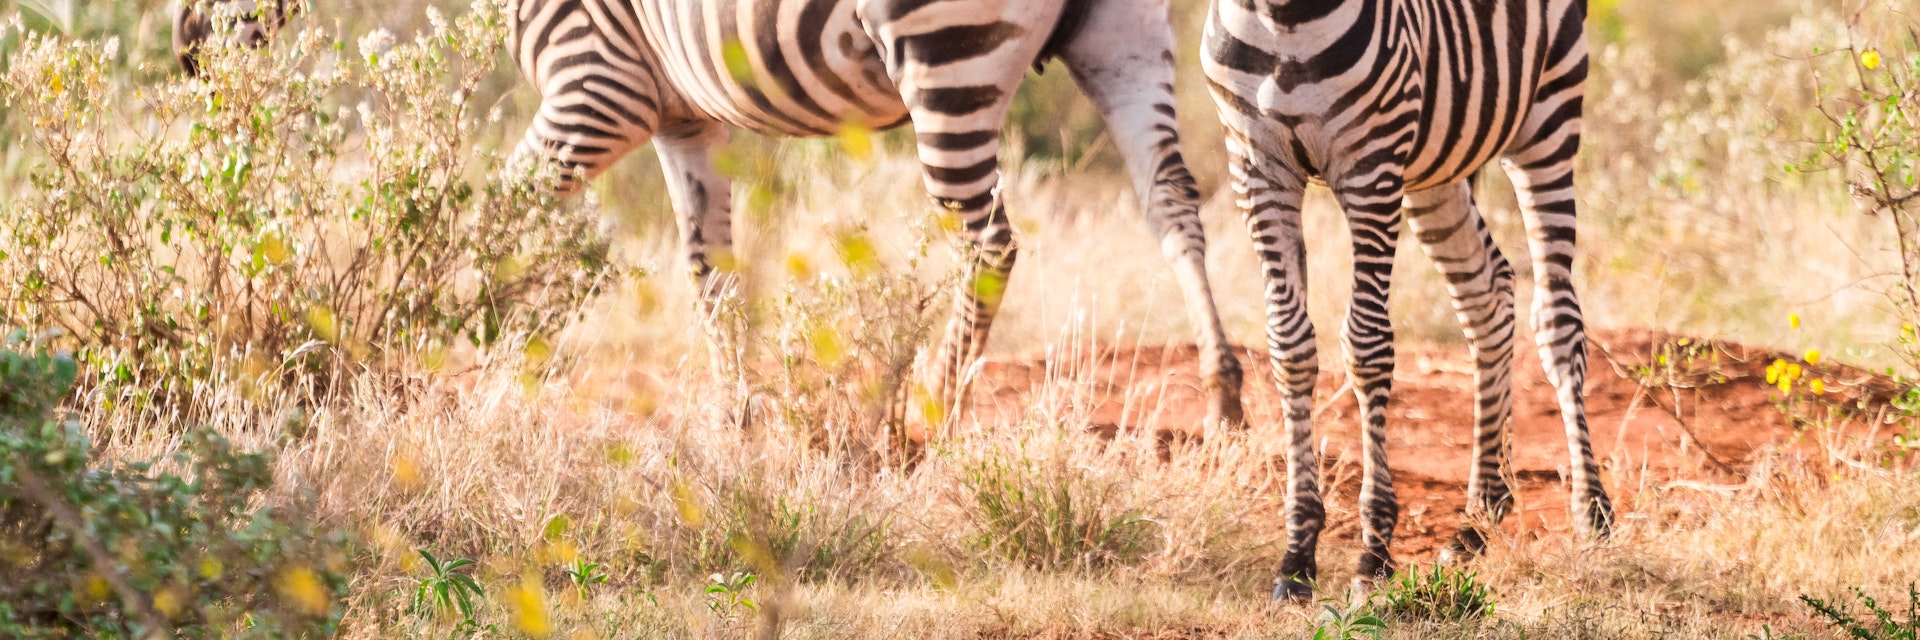 Wild zebras in Tsavo West National Park, Kenya.